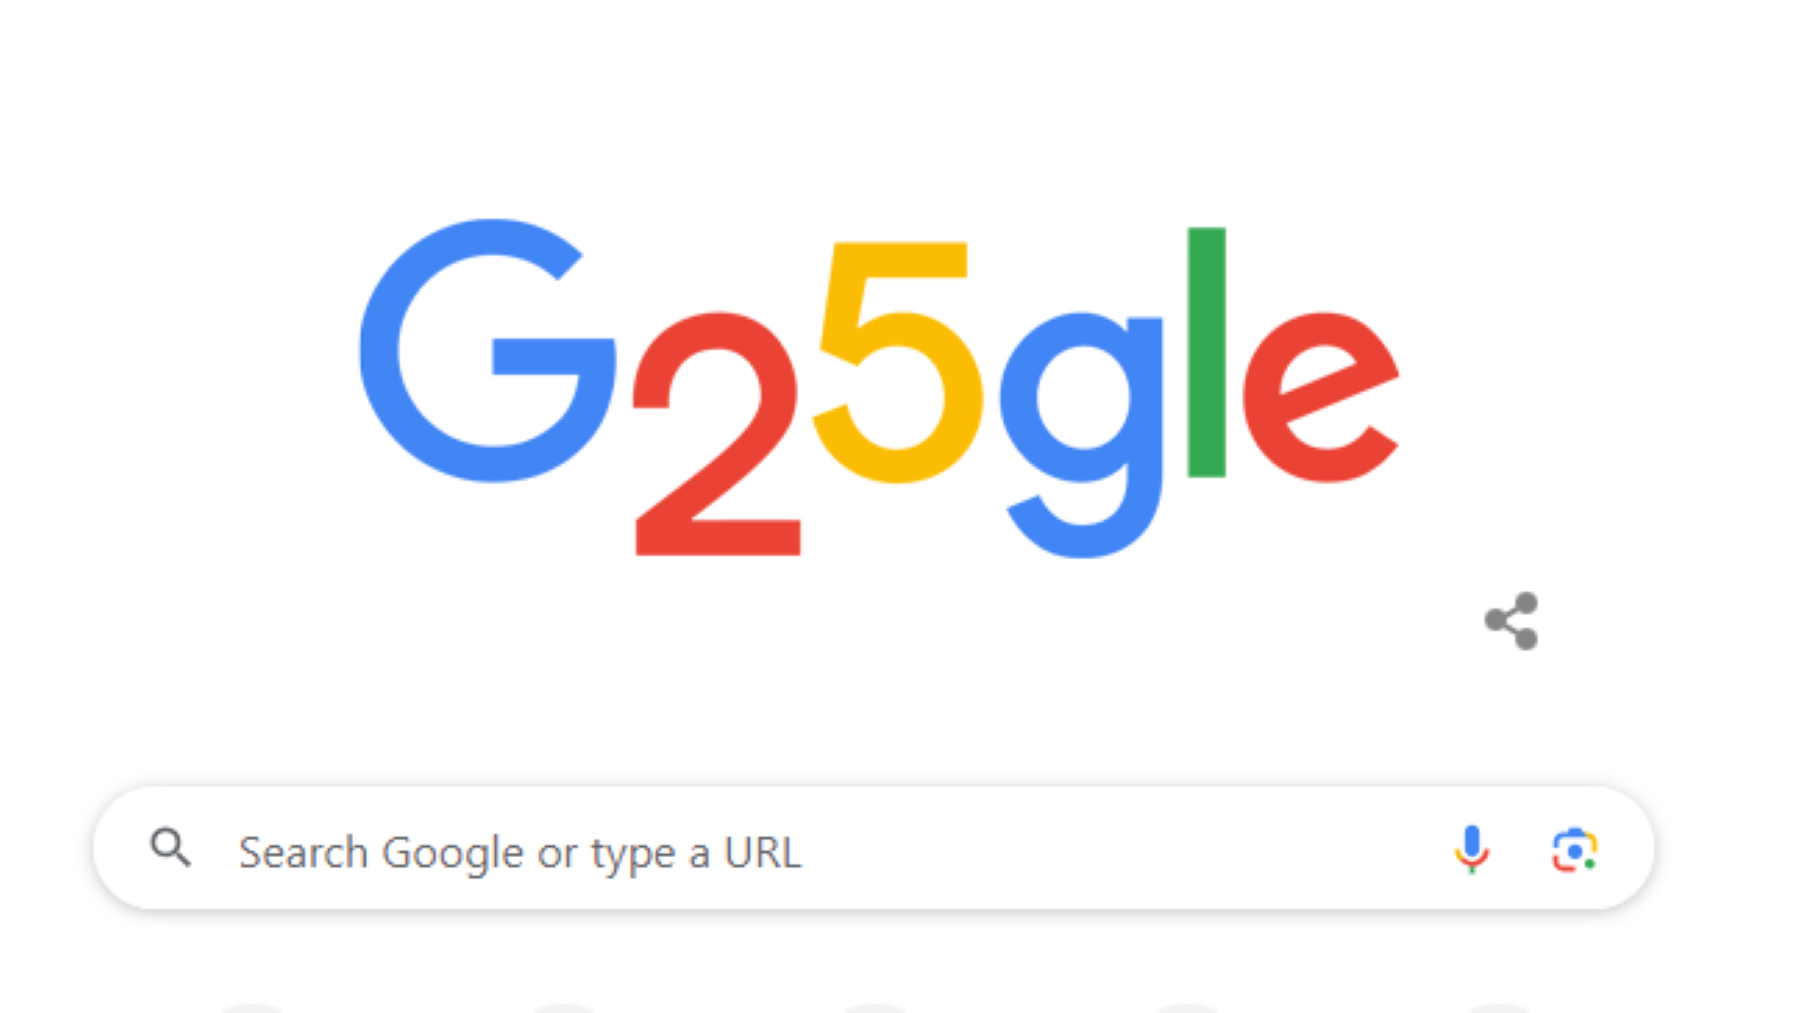 25 Tahun Google, G25GLE yang Dijadikan Google Doodle Hari ini, Berikut Sejarah Panjang Google